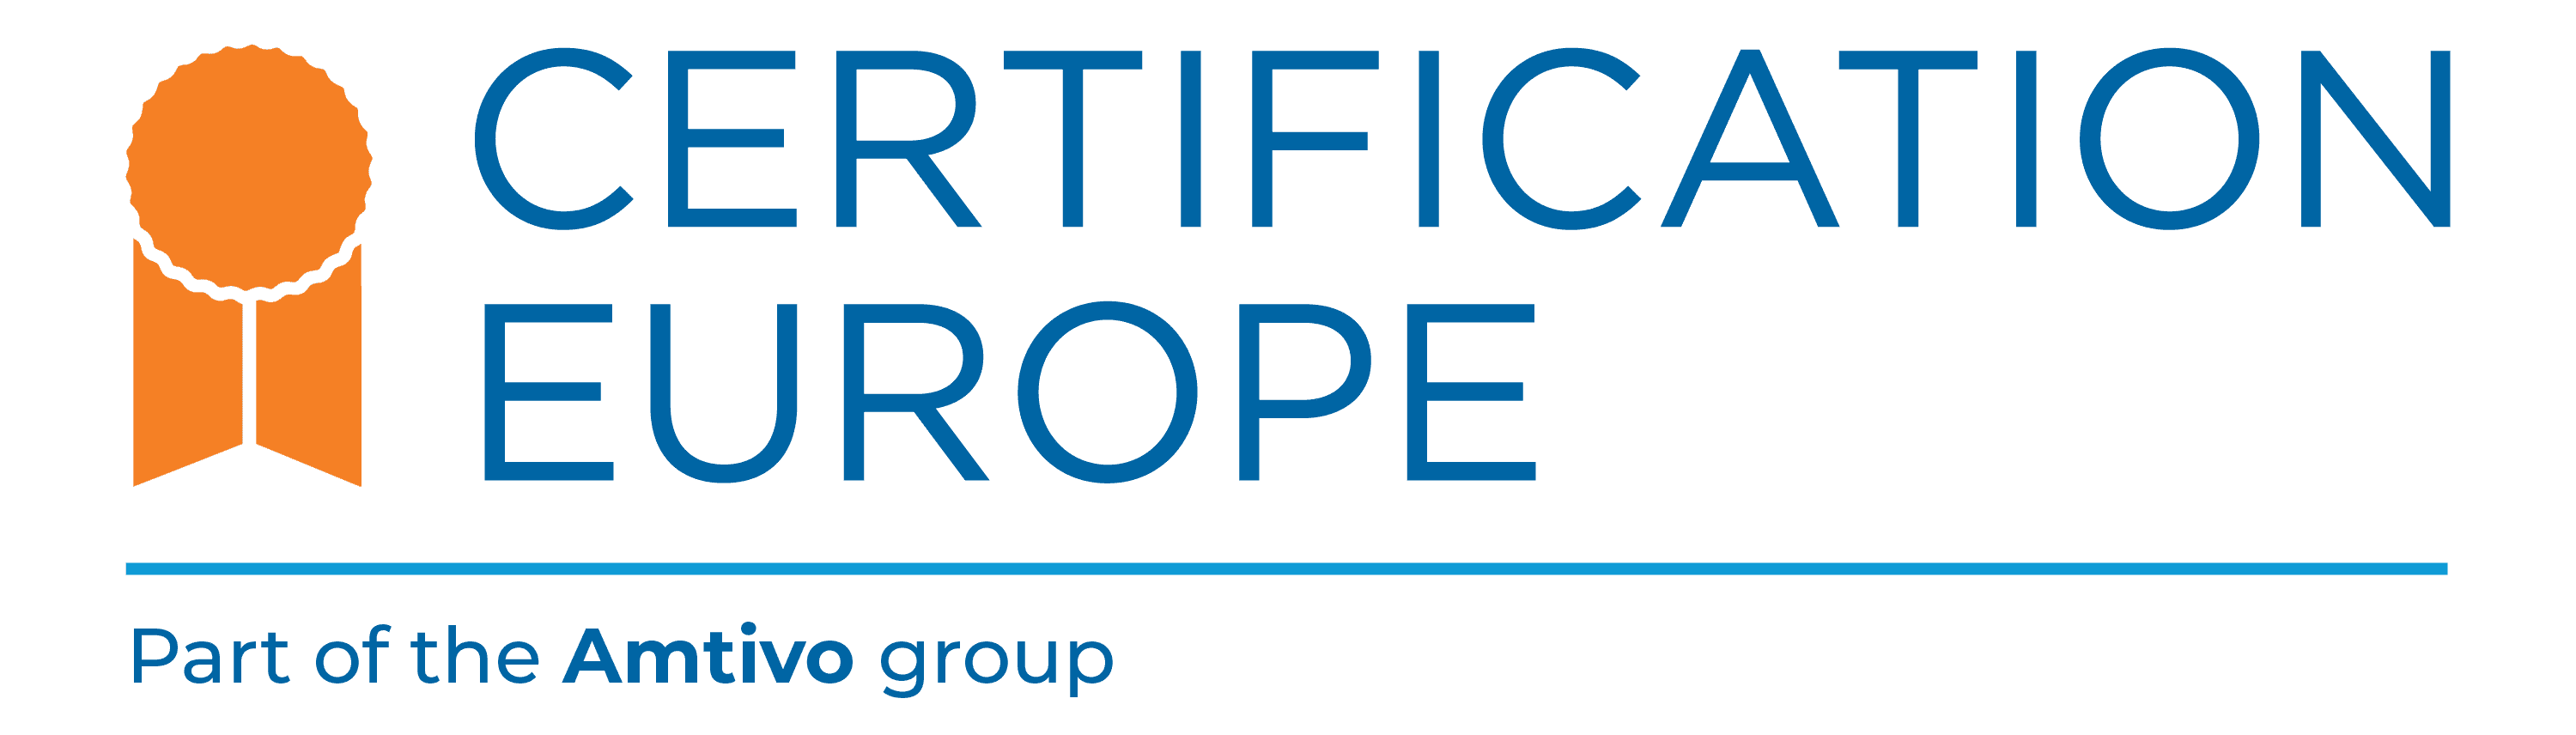 Certification Europe Logo - Part of Amtivo Group